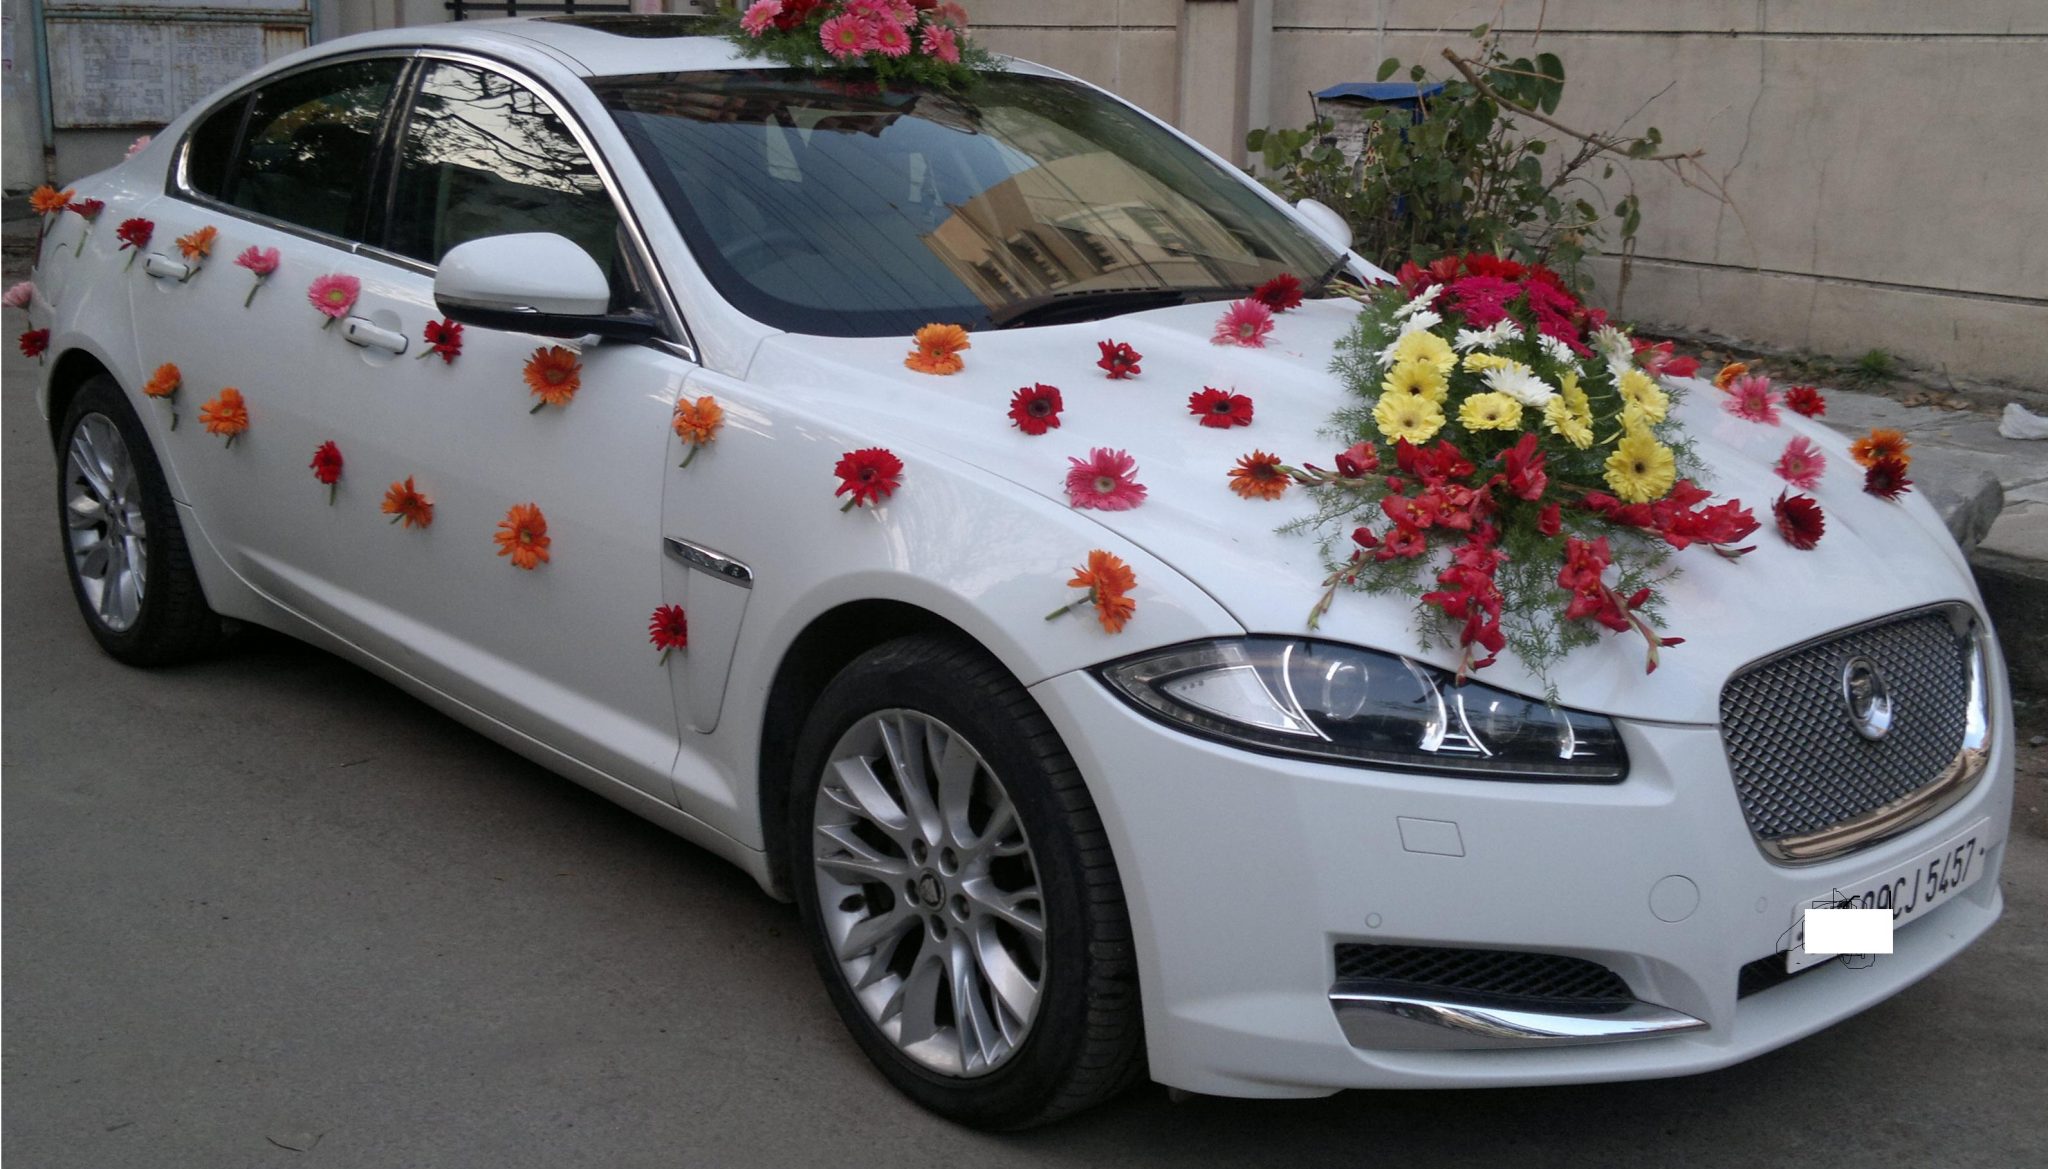 https://www.flowersdeliverygurgaon.com/wp-content/uploads/2015/10/wedding-car-decoration-24.jpg